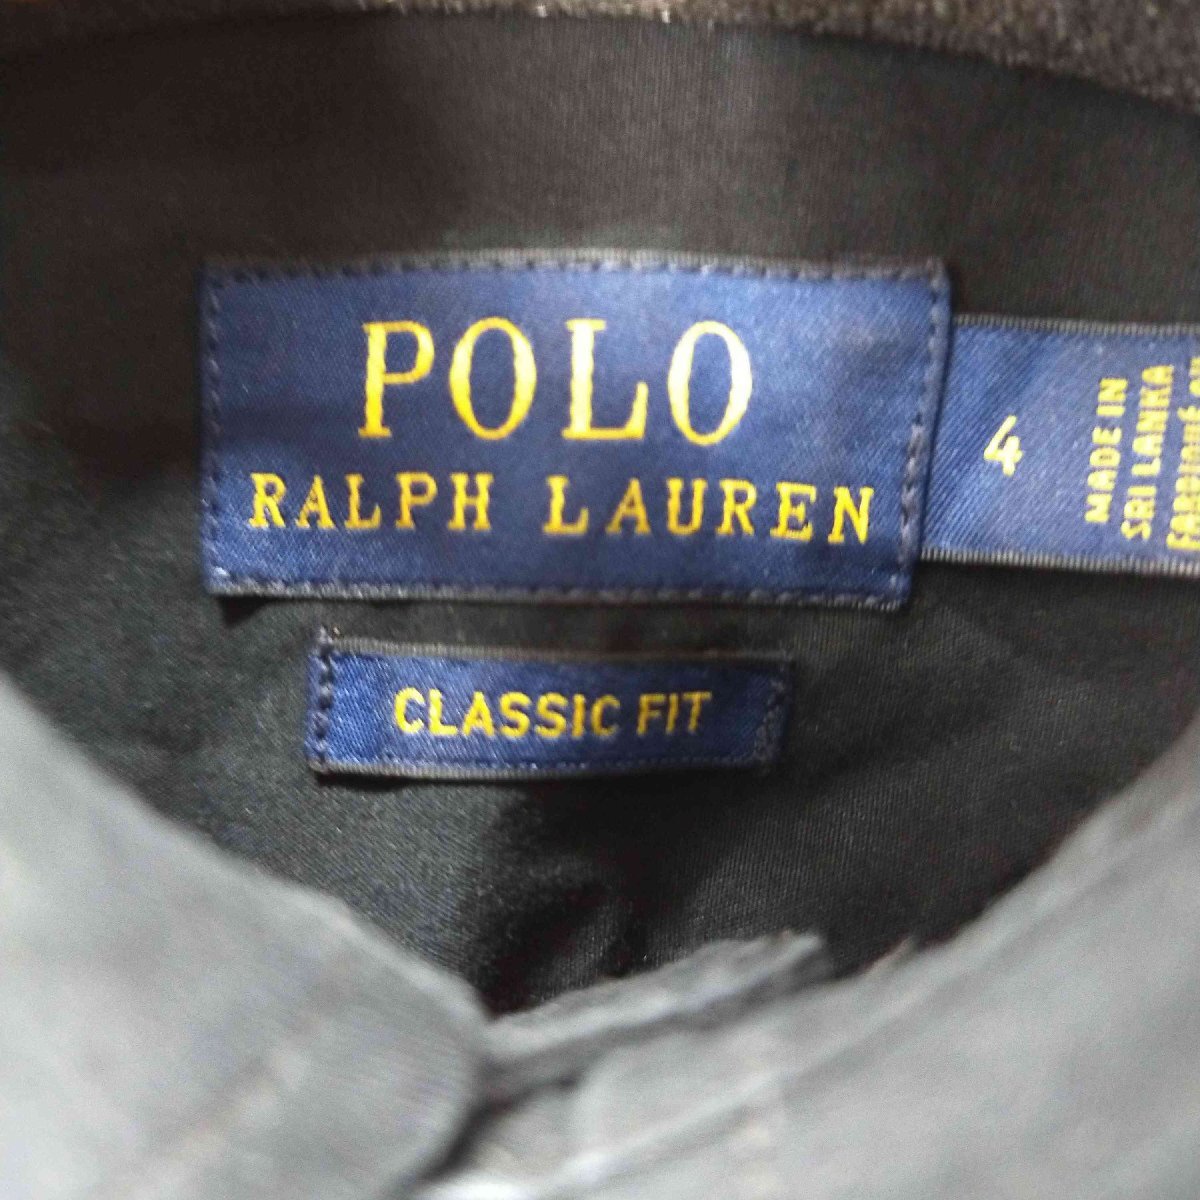 POLO RALPH LAUREN(ポロラルフローレン) CLASSIC FIT スモールポニー刺繍L/S 中古 古着 0444_画像6